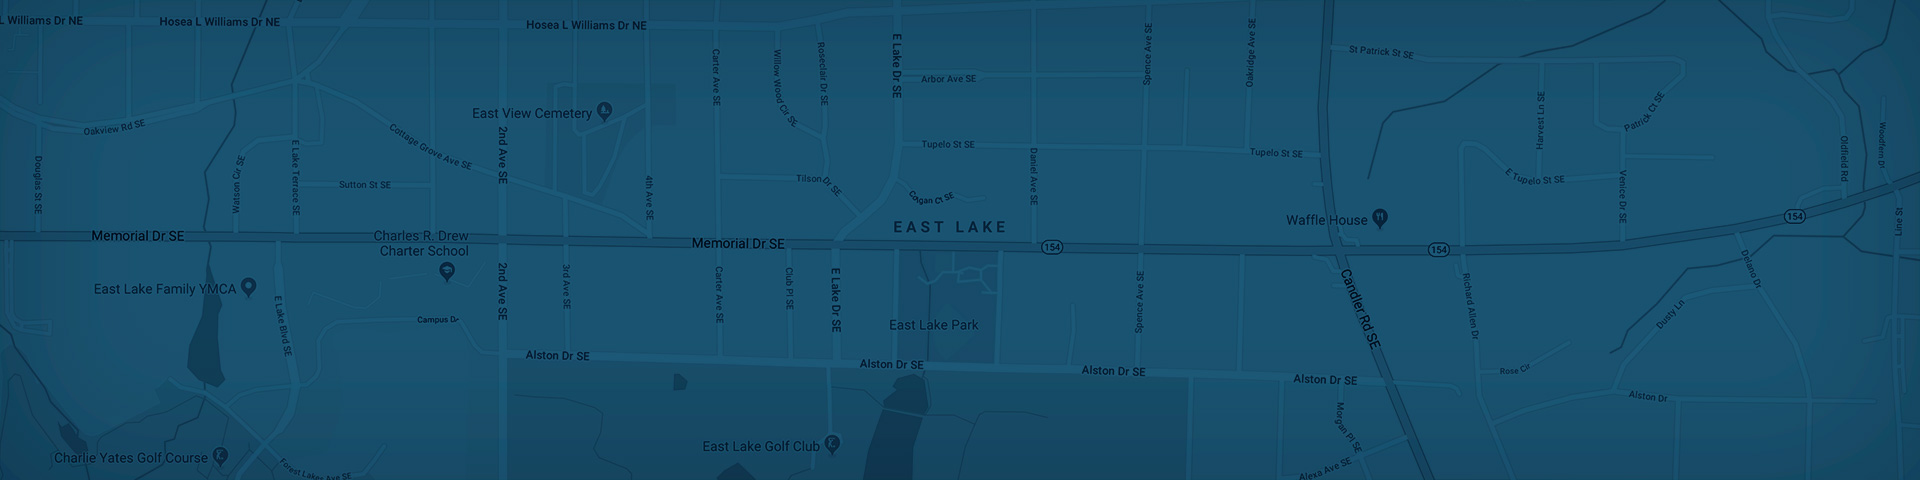 East Lake Map